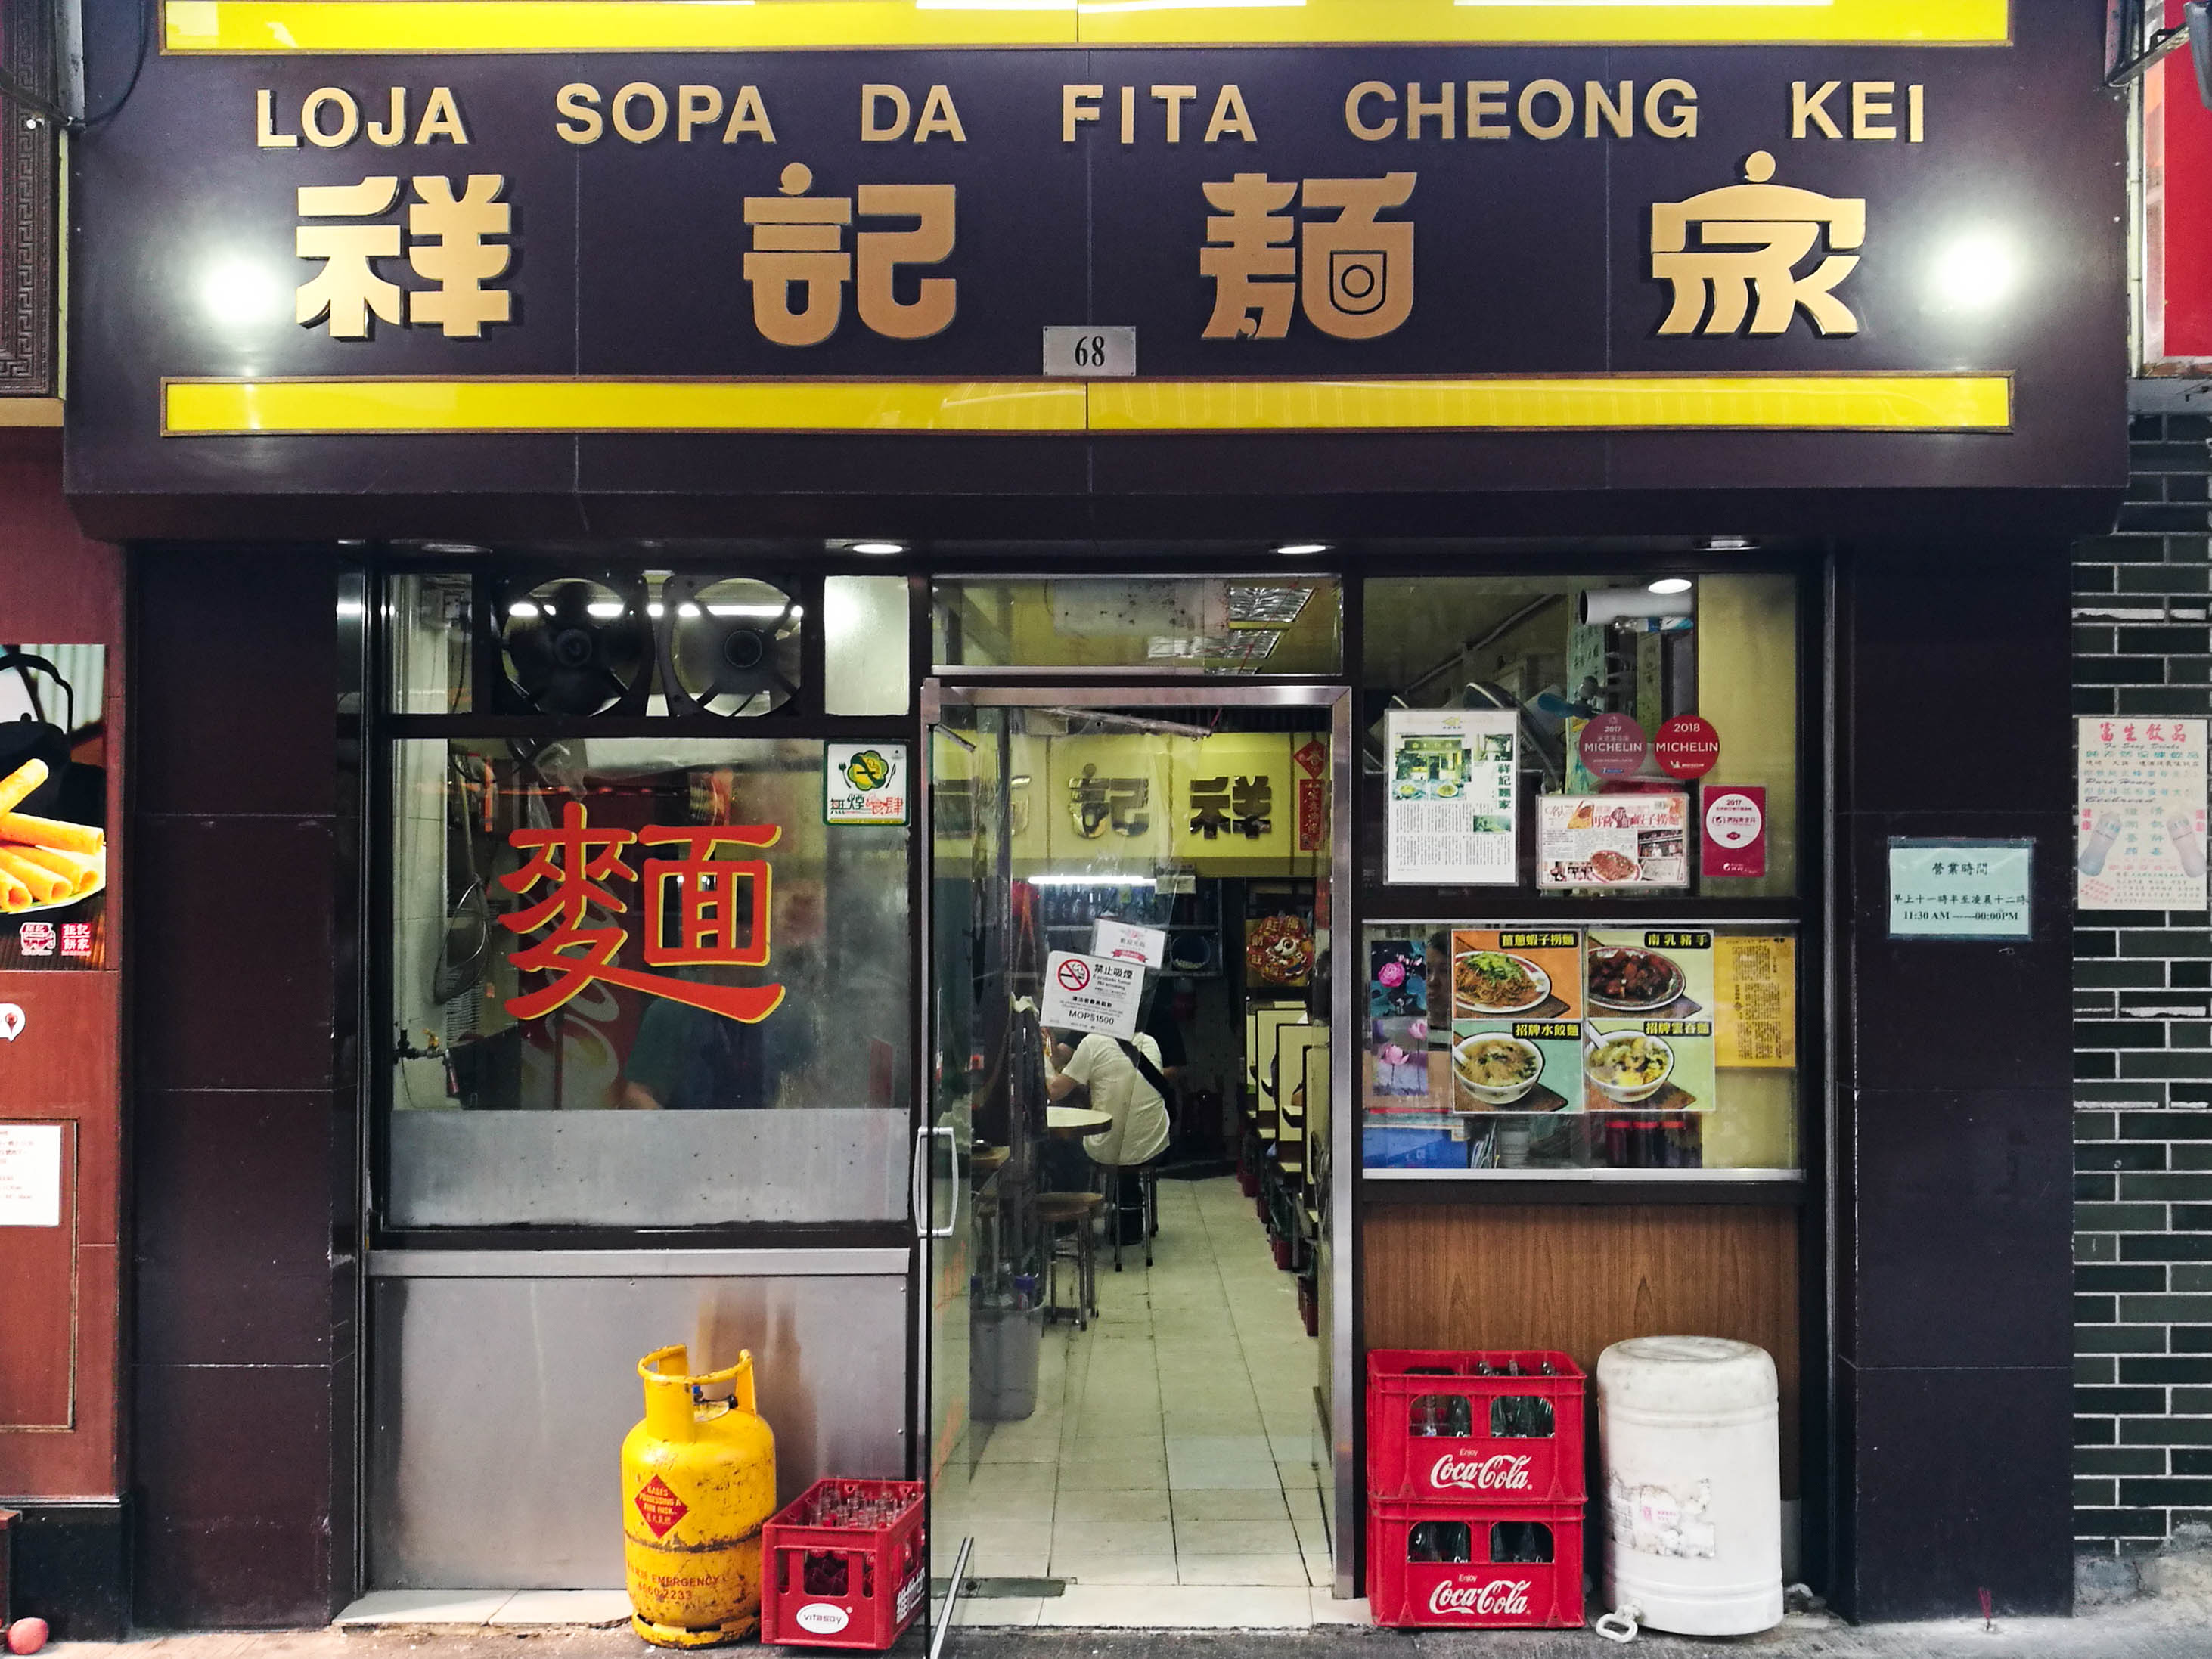 local-style noodles Macau Loja Sopa da Fita Cheong Kei